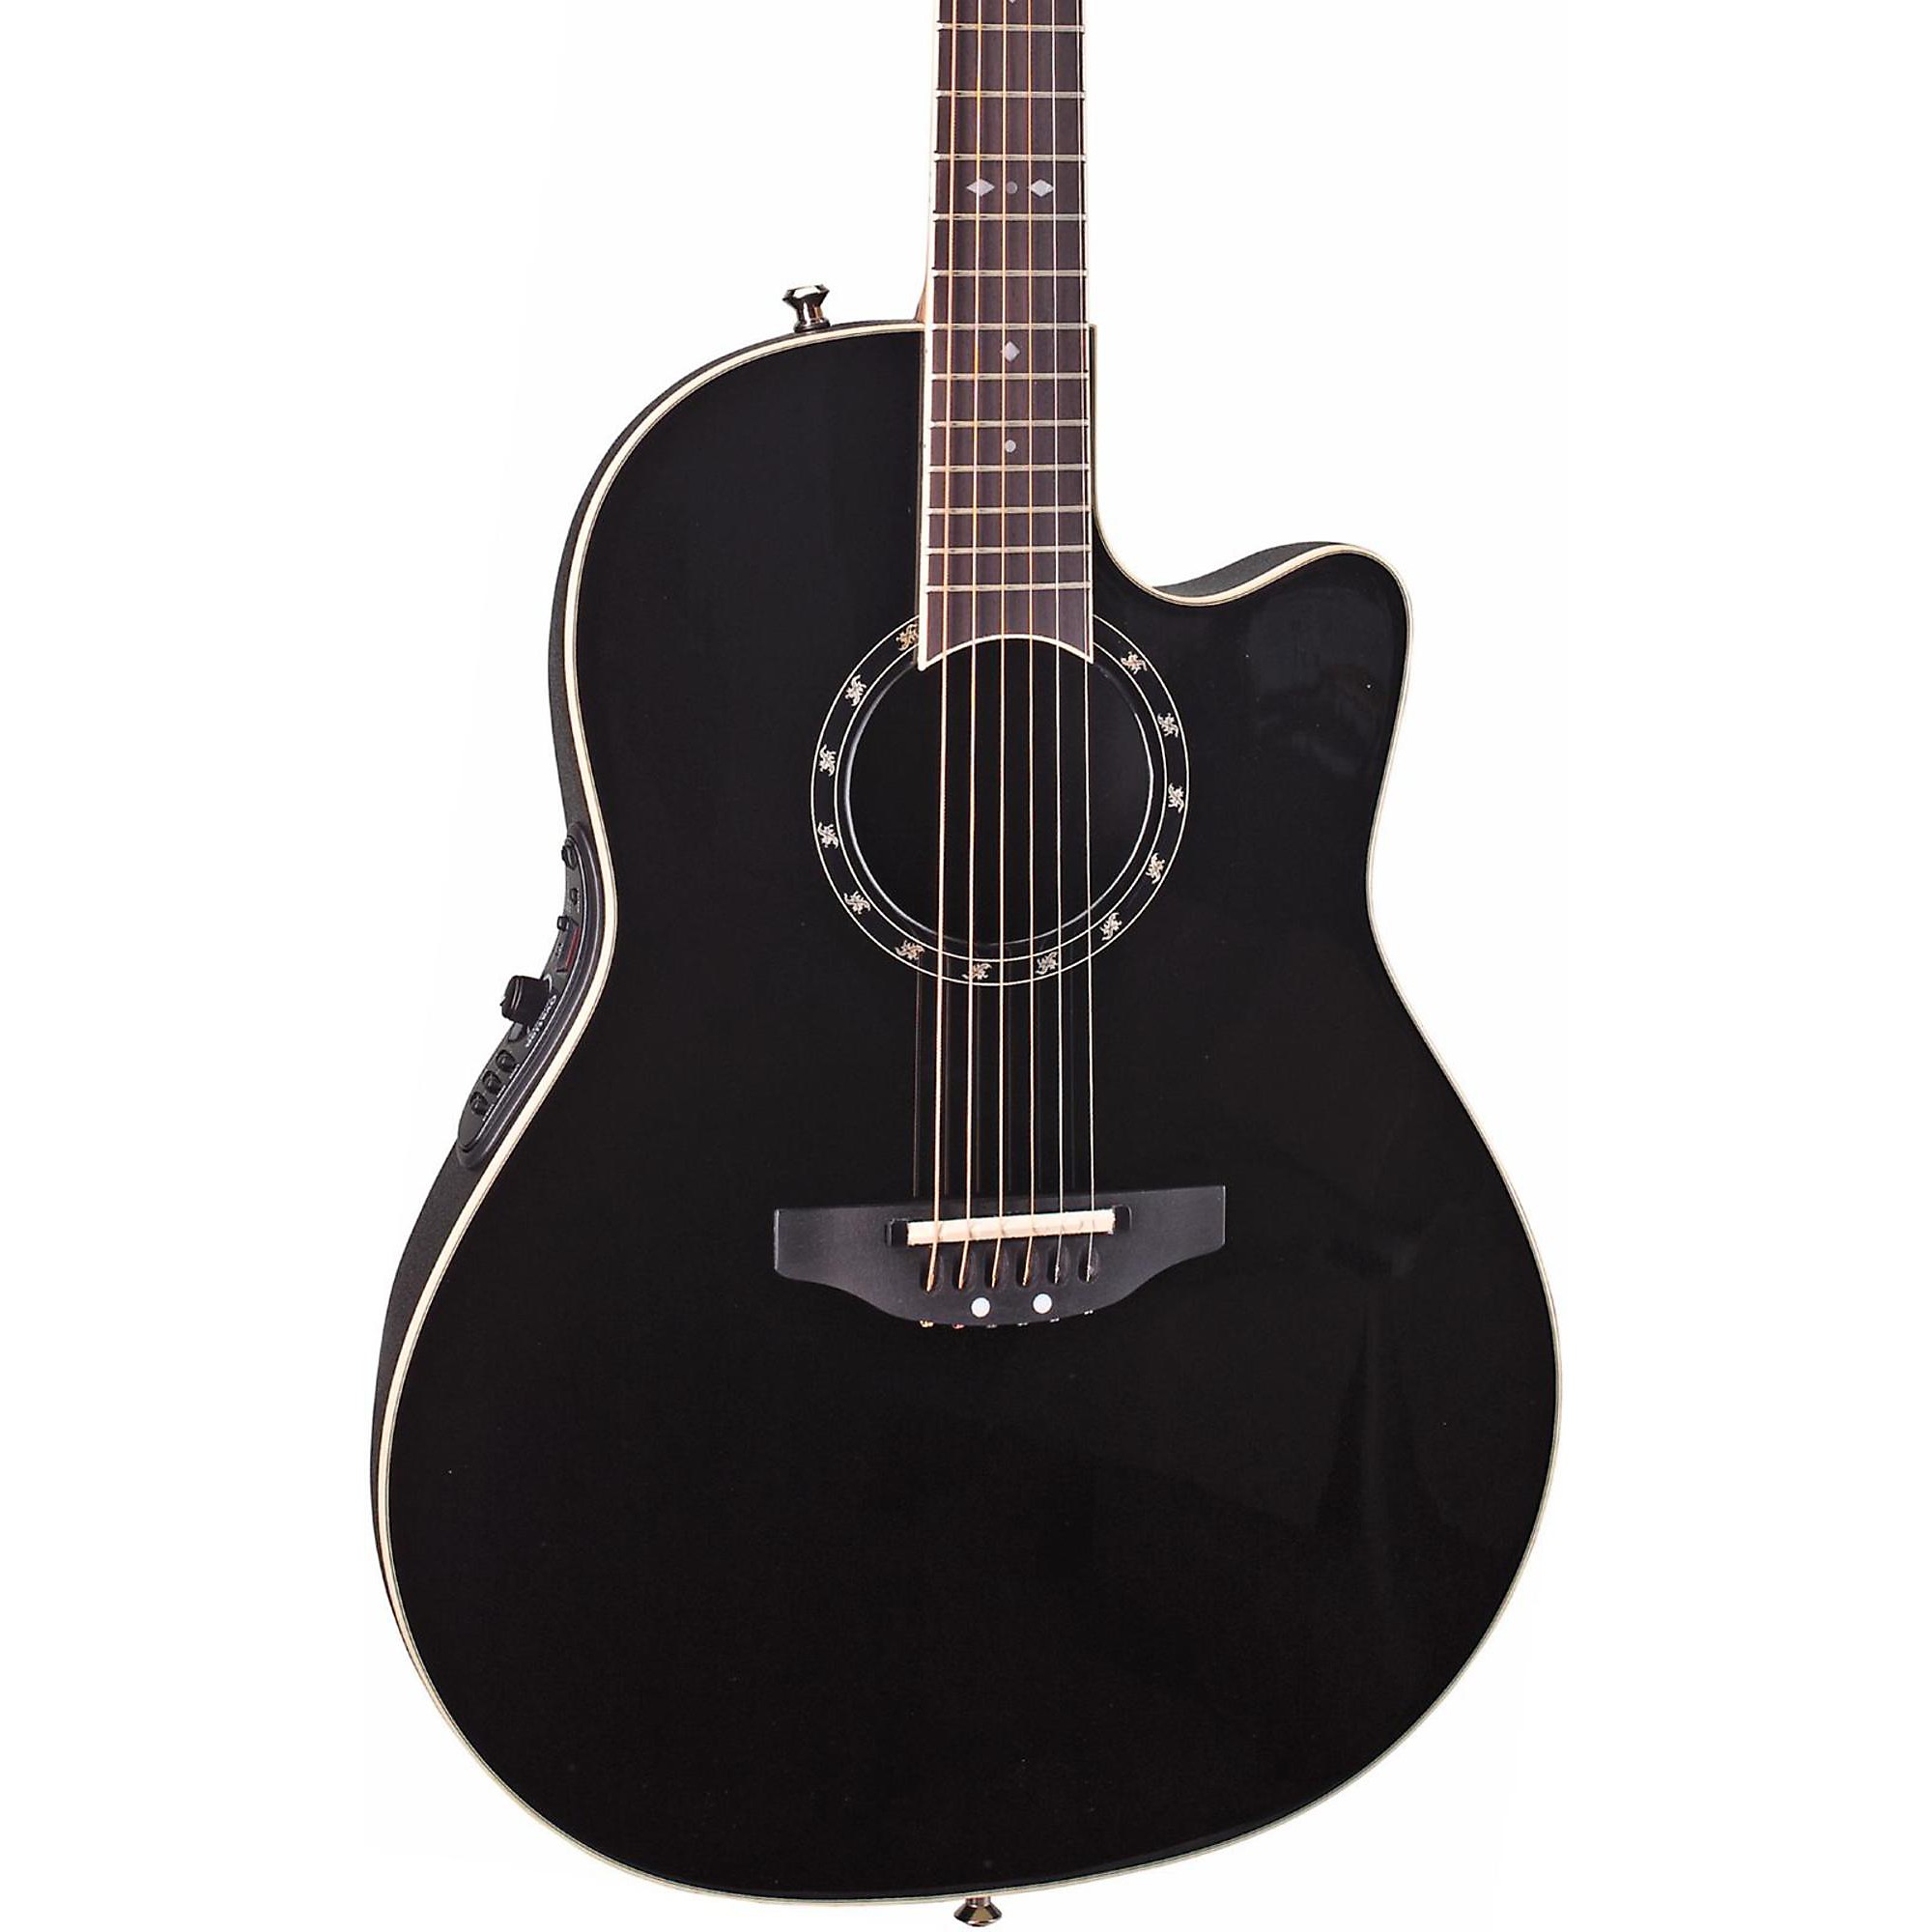 Акустически-электрическая гитара Ovation Standard Balladeer 2771 AX черная электроакустическая гитара ovation standard balladeer 2771ax 1 sunburst